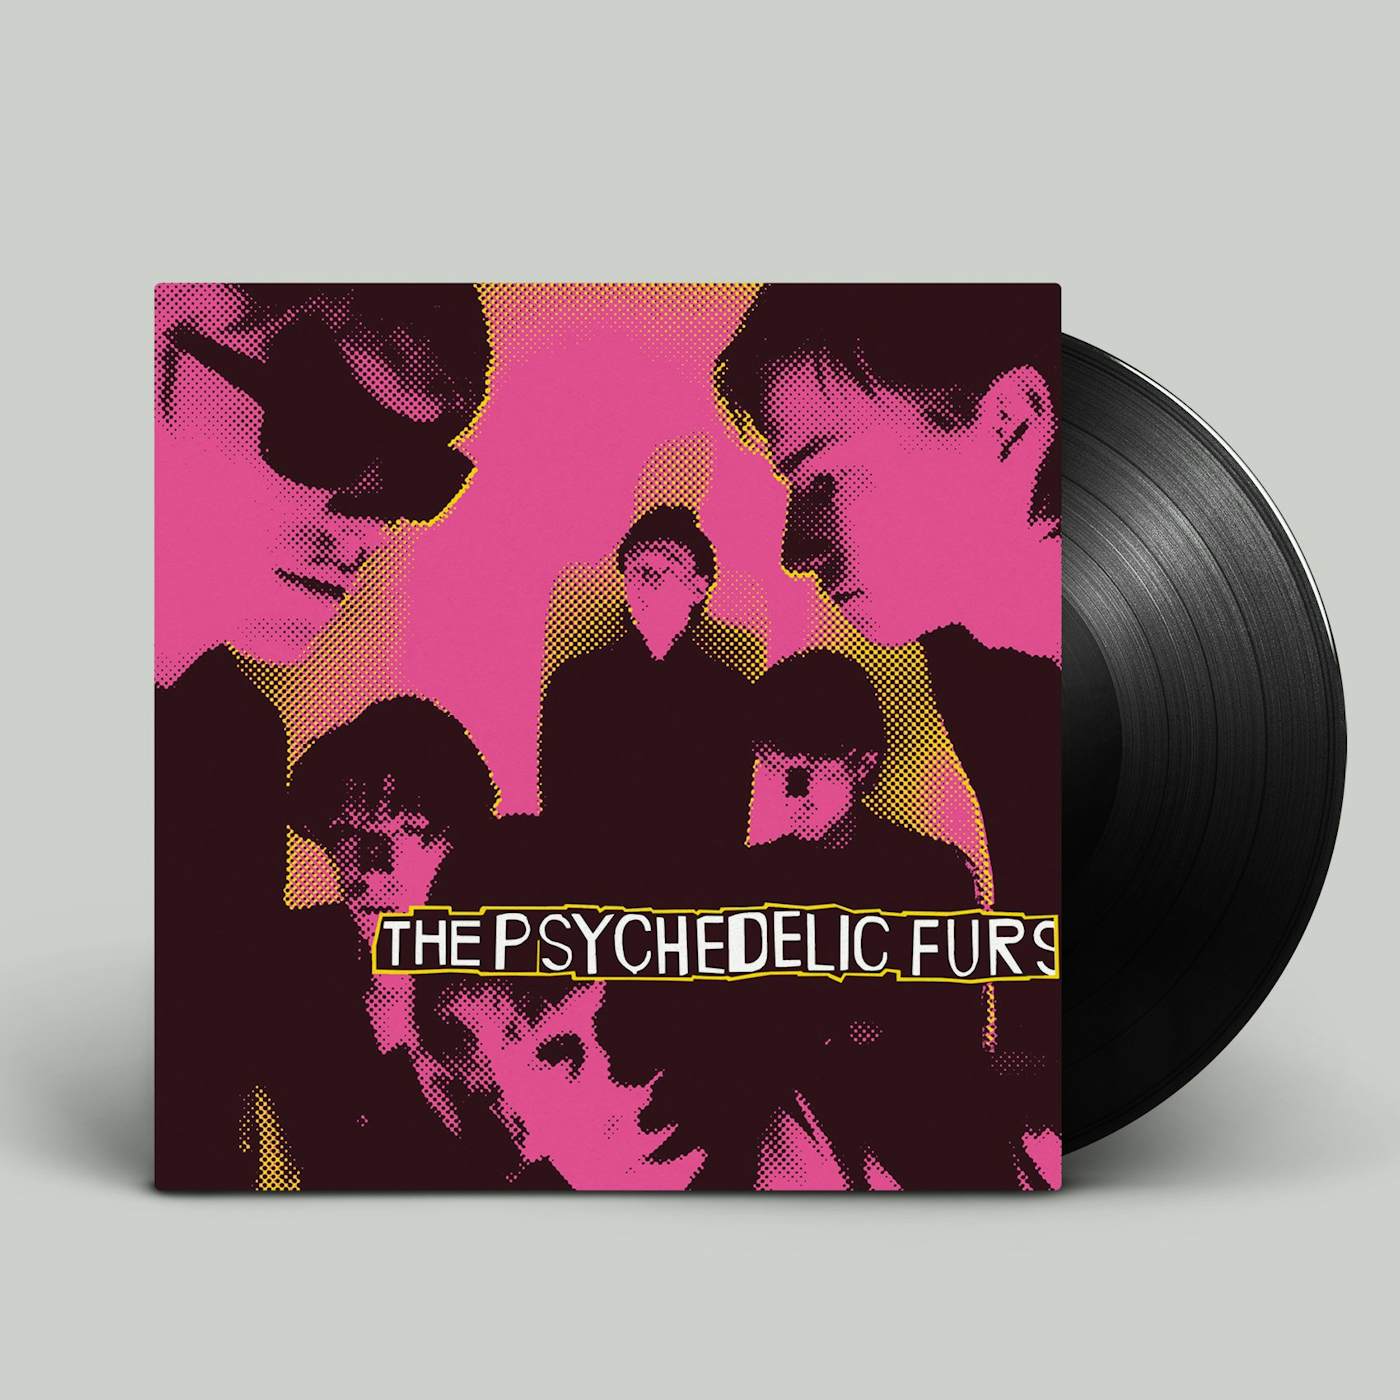 THE PSYCHEDELIC FURS - LP (Vinyl)